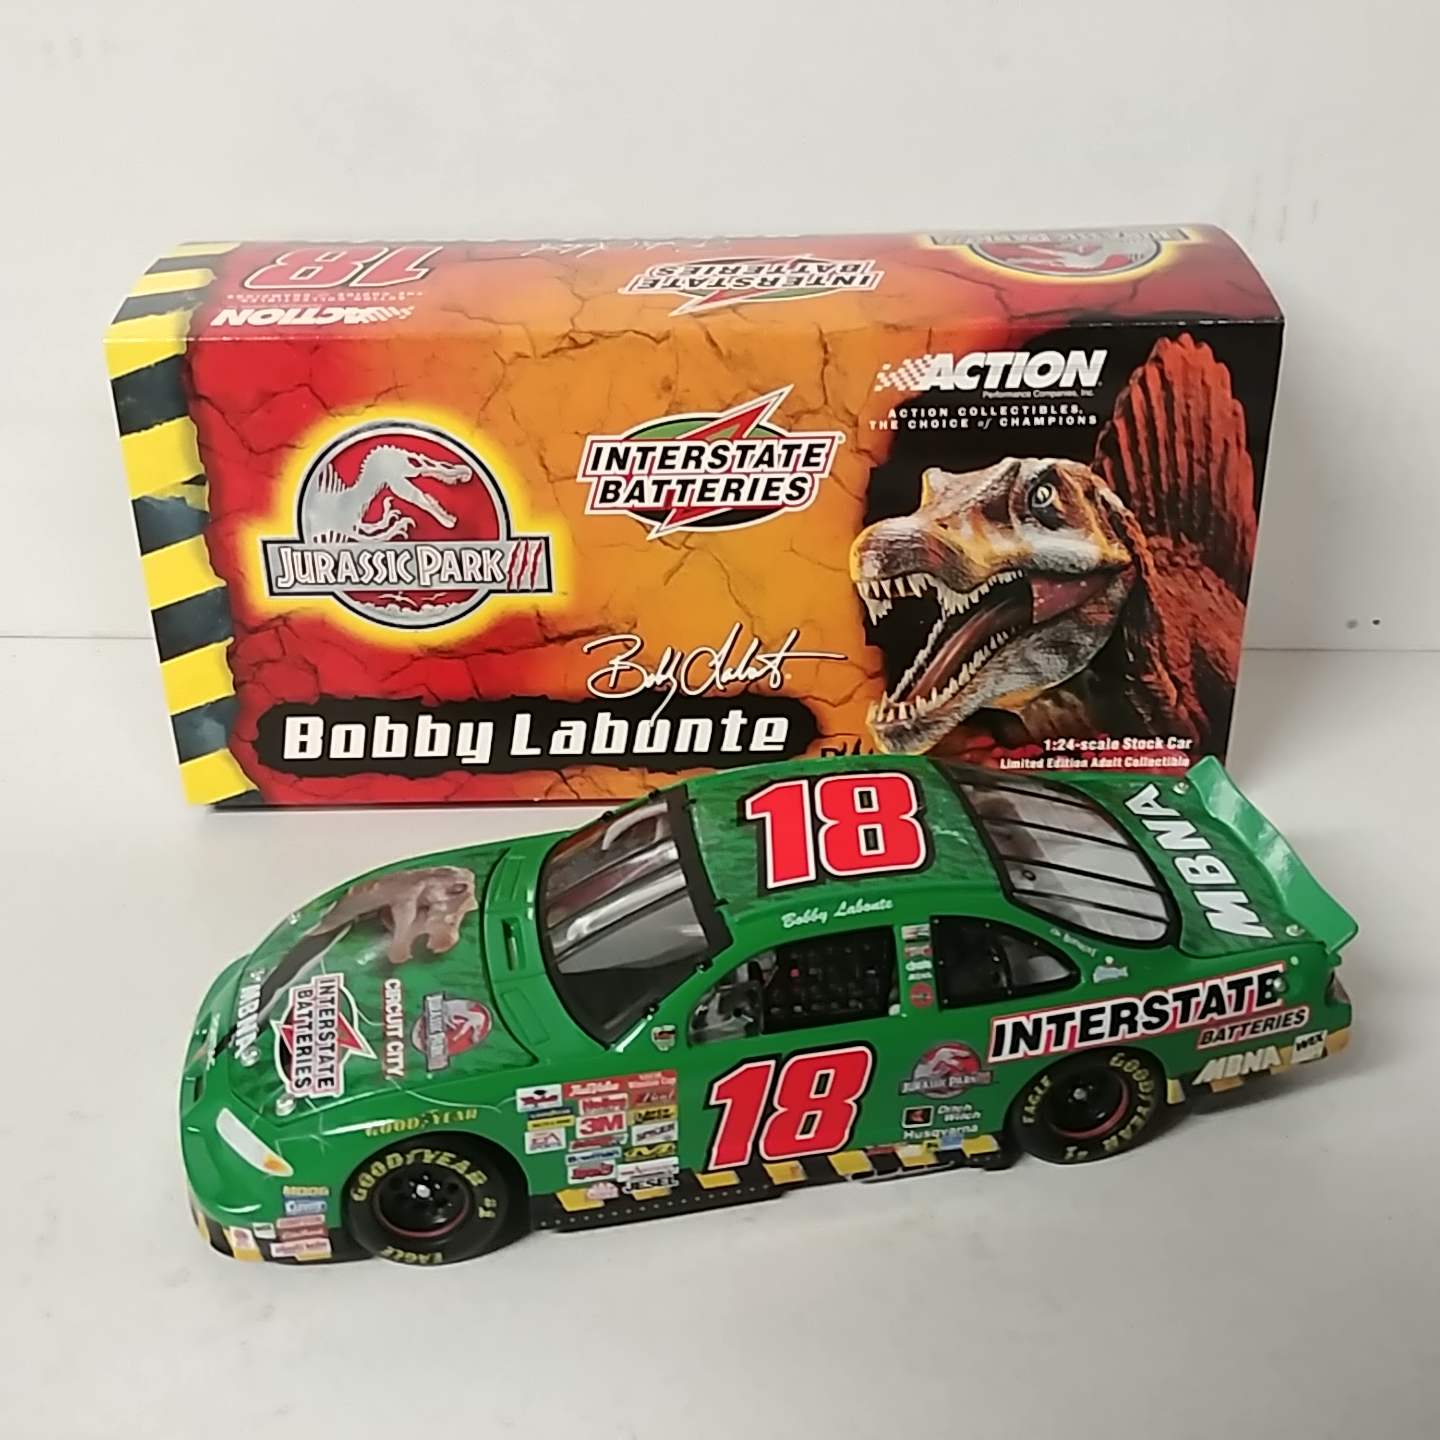 2001 Bobby Labonte 1/24th Interstate Batteries "Jurassic Park" c/w car